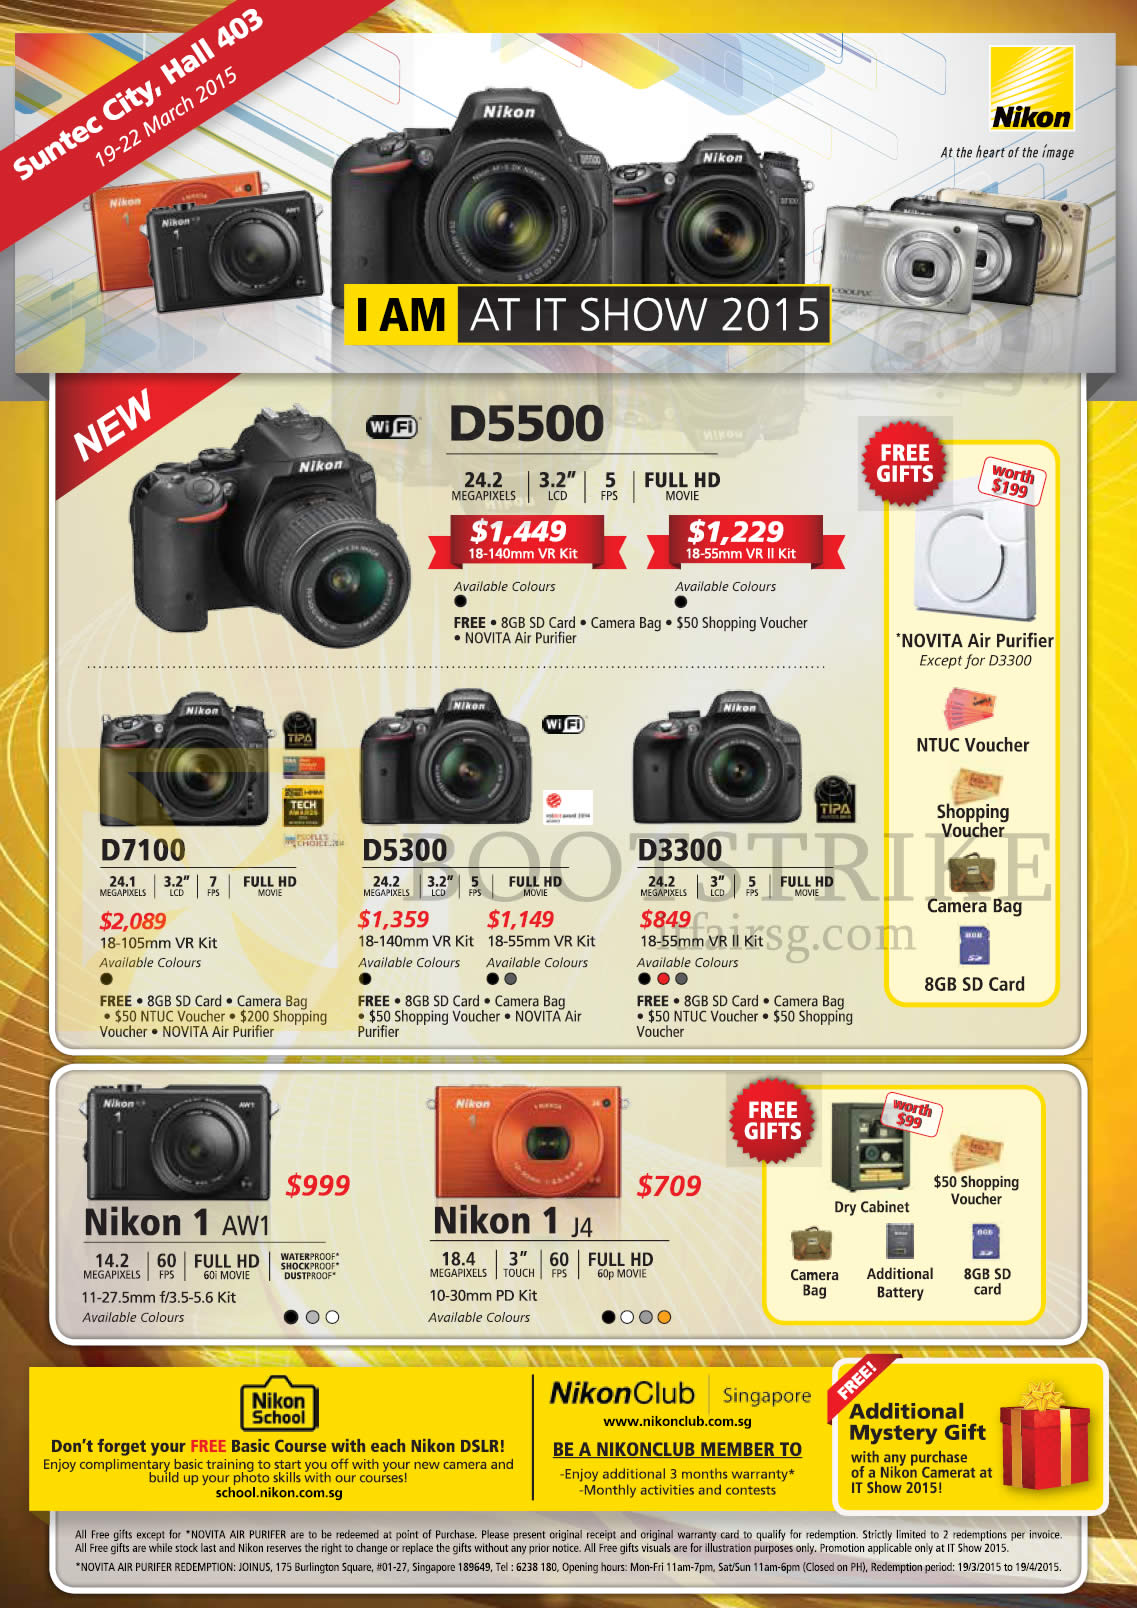 IT SHOW 2015 price list image brochure of Nikon Digital Cameras DSLR D5500, D7100, D5300, D3300, Nikon 1 AW1, J4